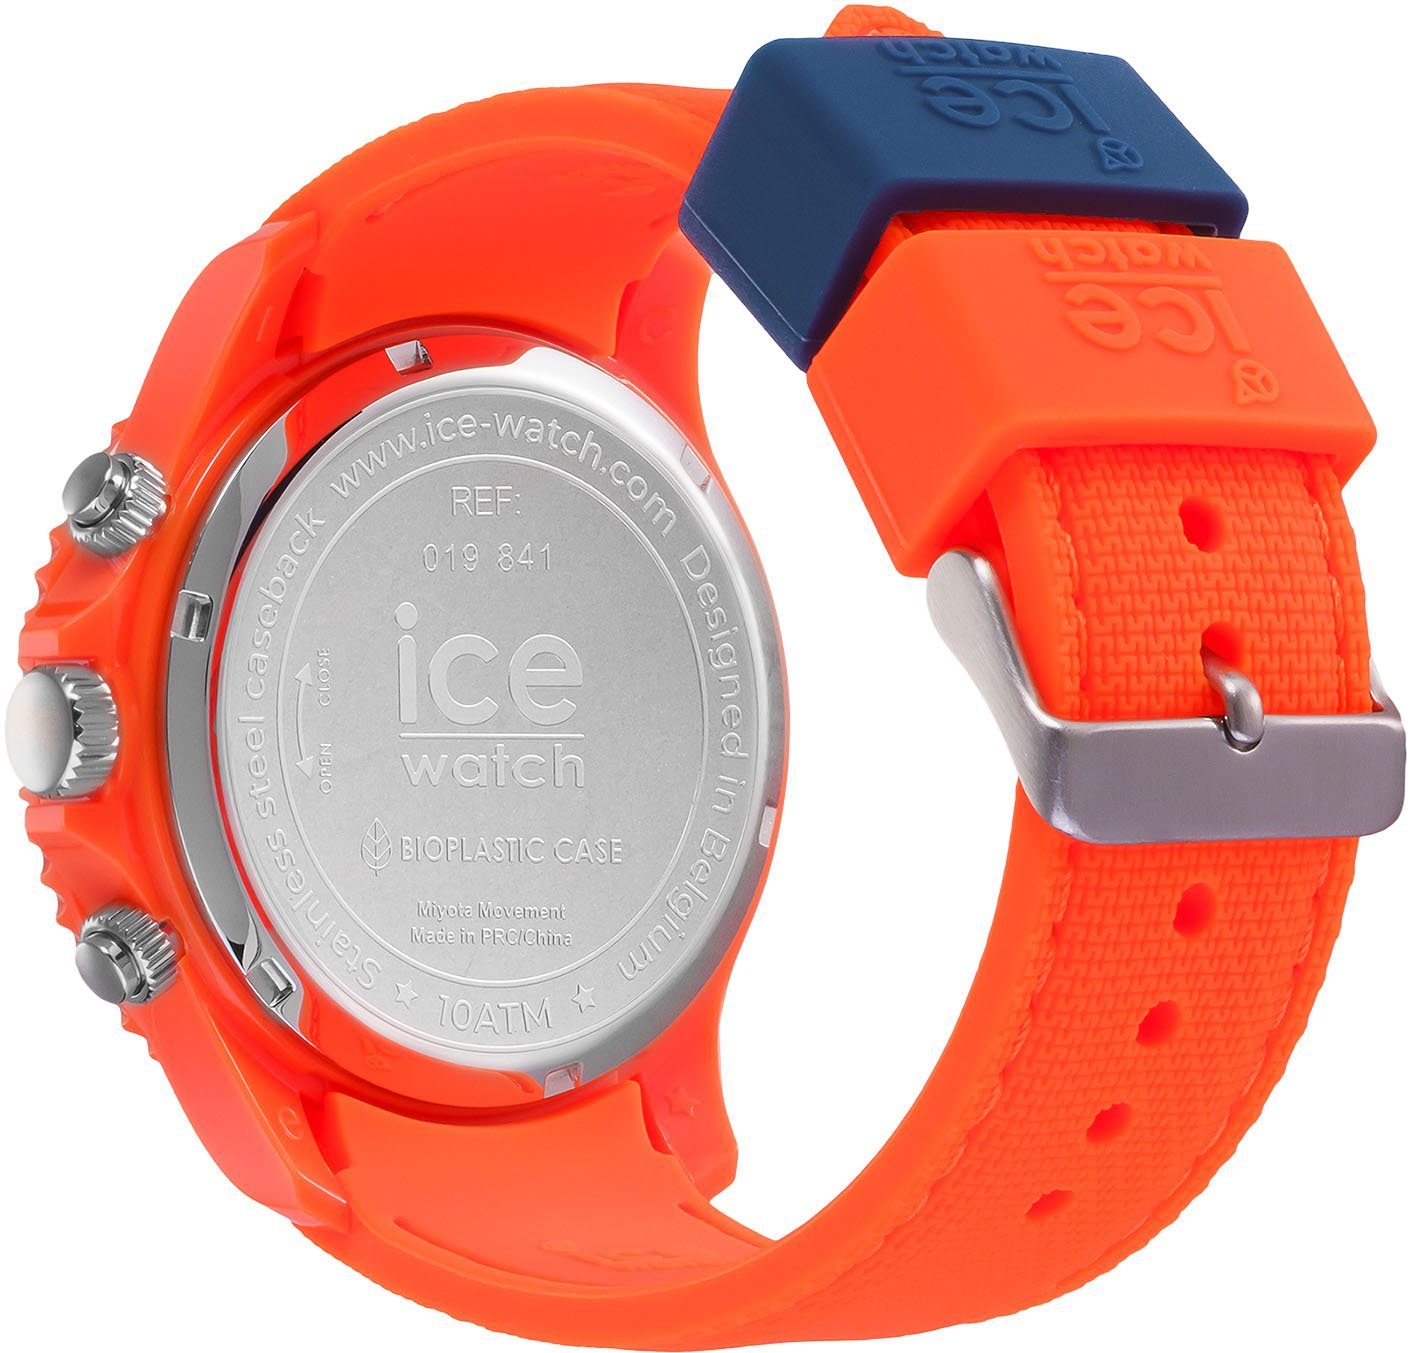 - ice-watch - blue - Chronograph CH, 019841 ICE chrono Large Orange